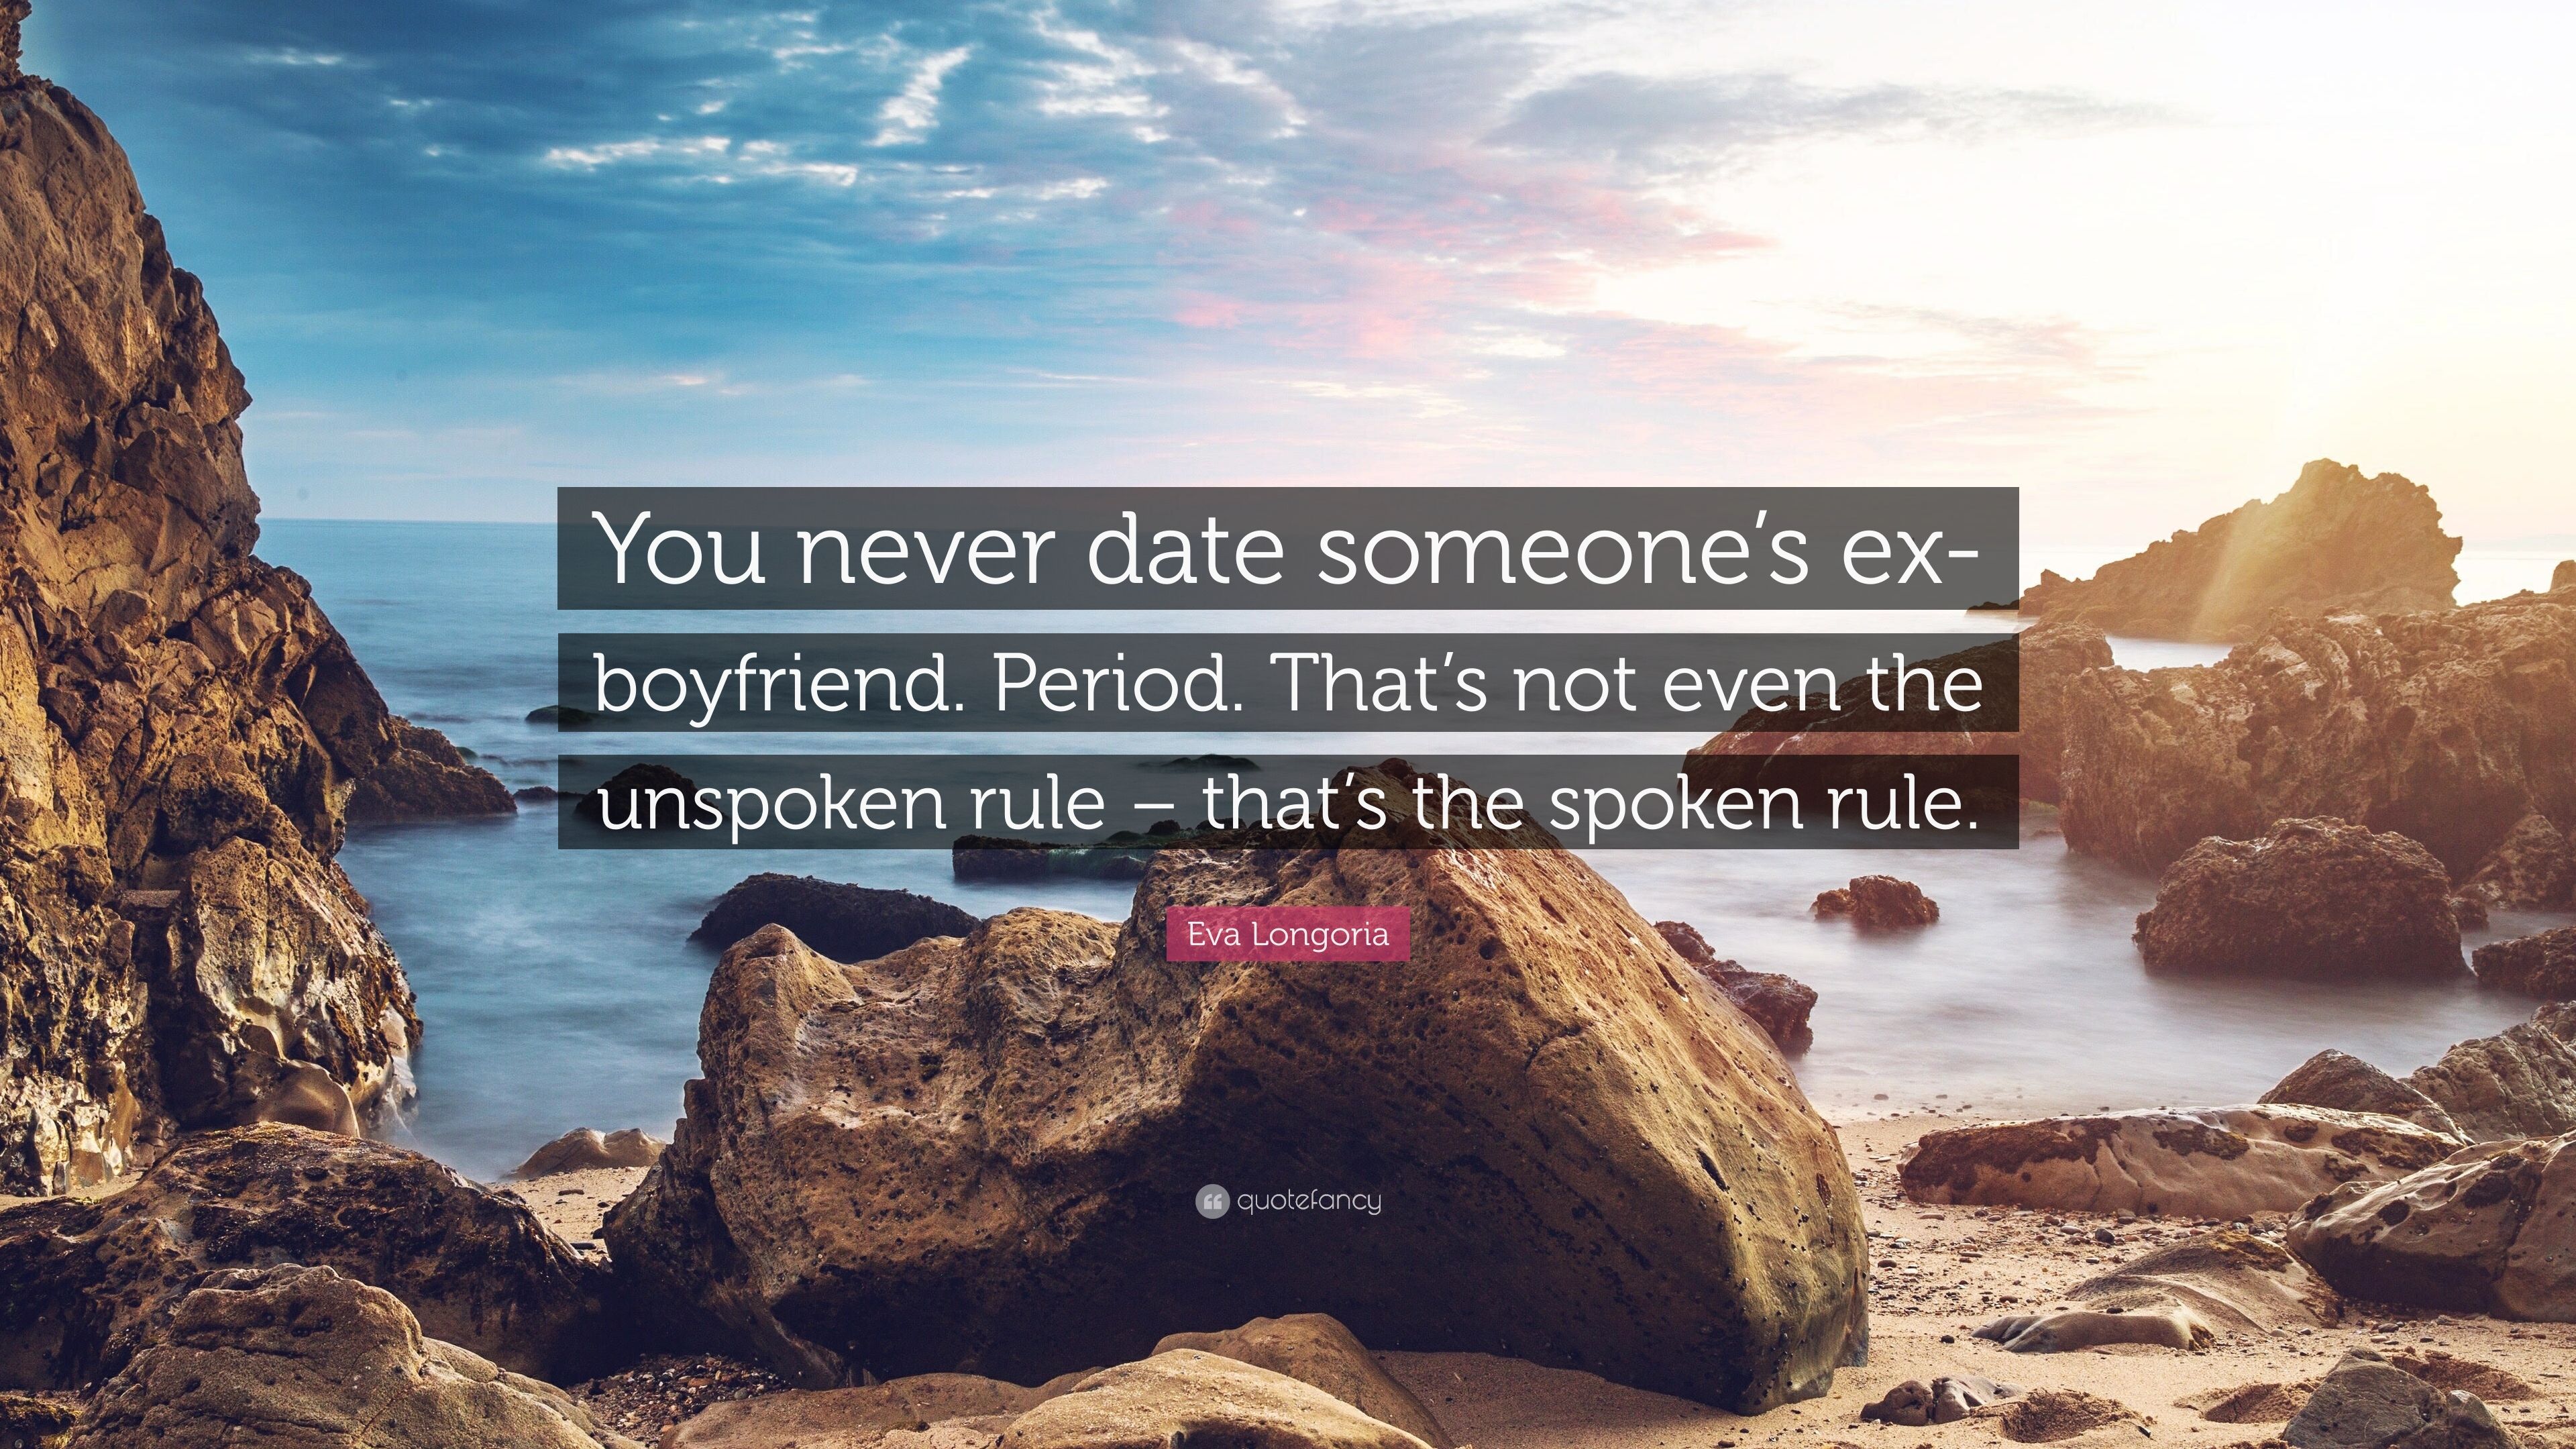 Eva Longoria Quote: “You Never Date Someone's Ex Boyfriend. Period. That's Not Even The Unspoken Rule